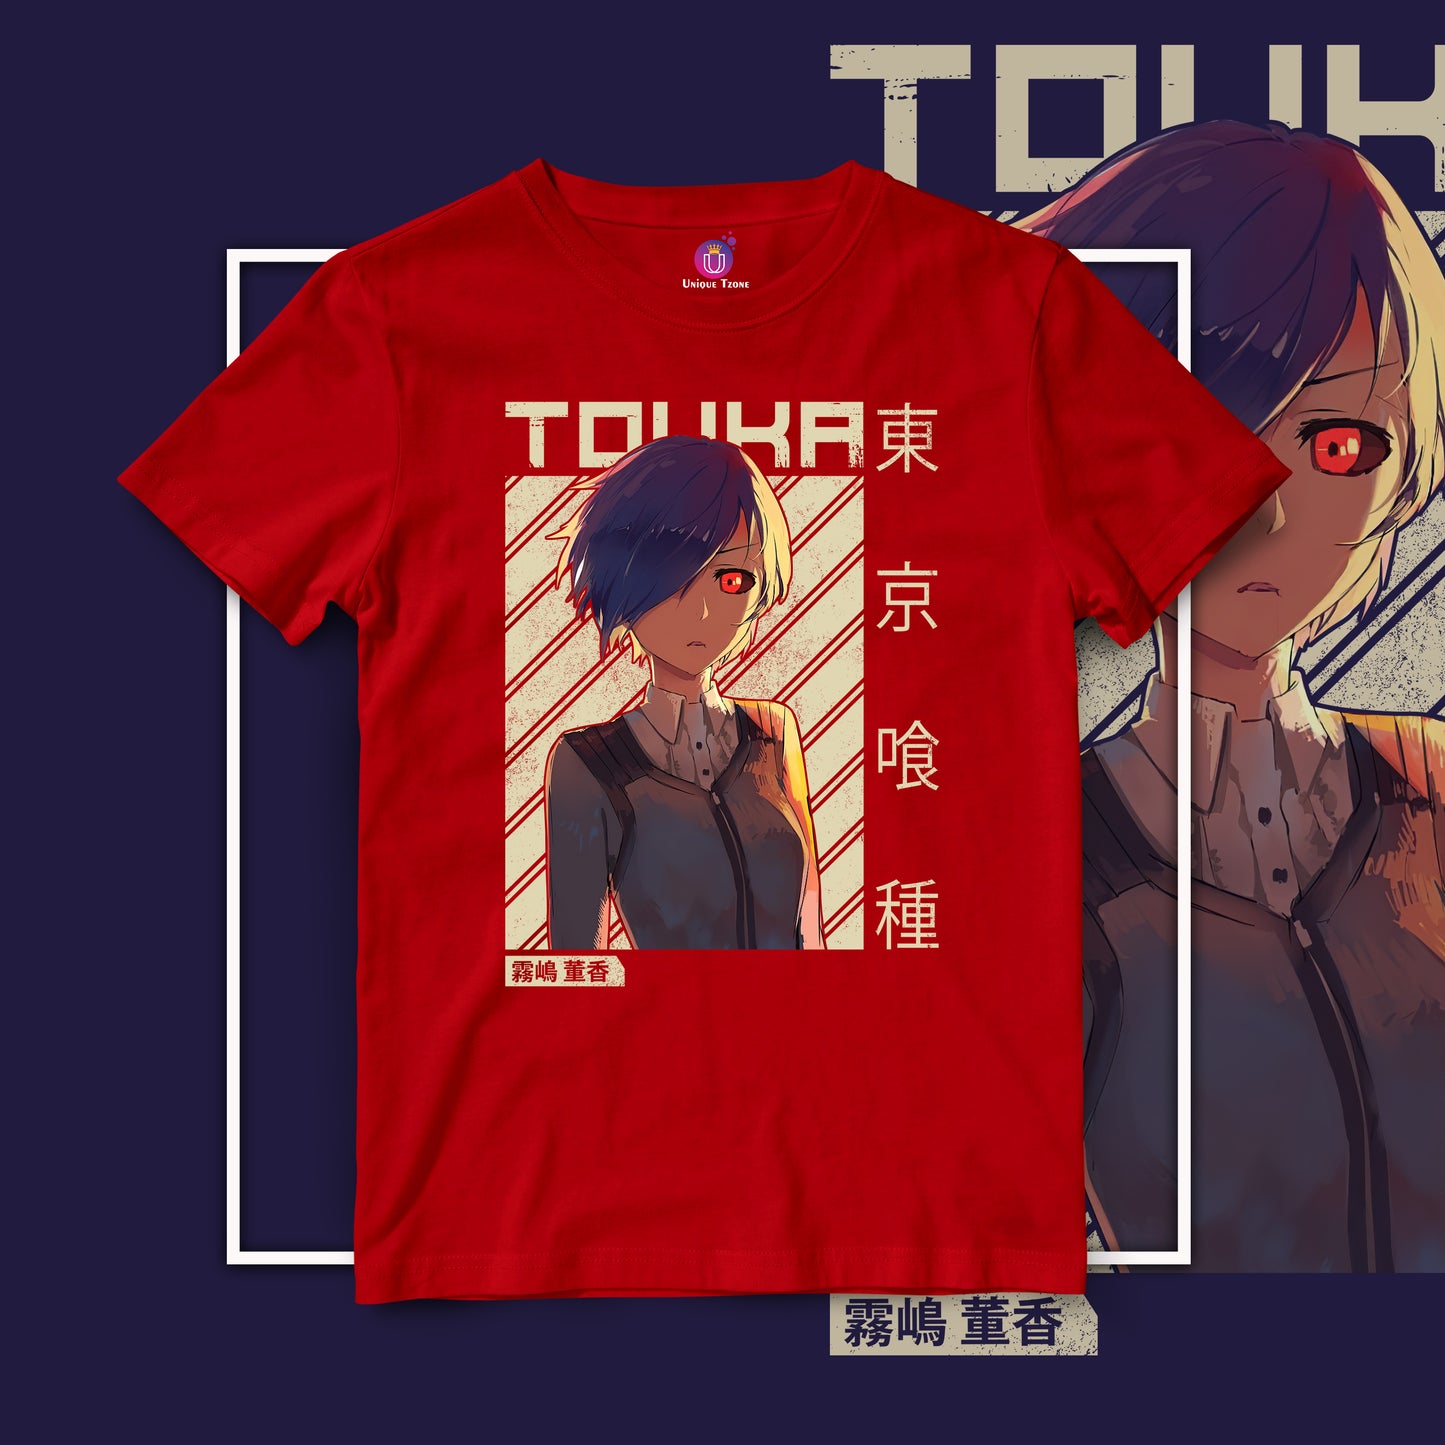 Touka Otaku Tokyo Ghoul Anime Graphics Half Sleeve Unisex Round Neck Anime Tshirt